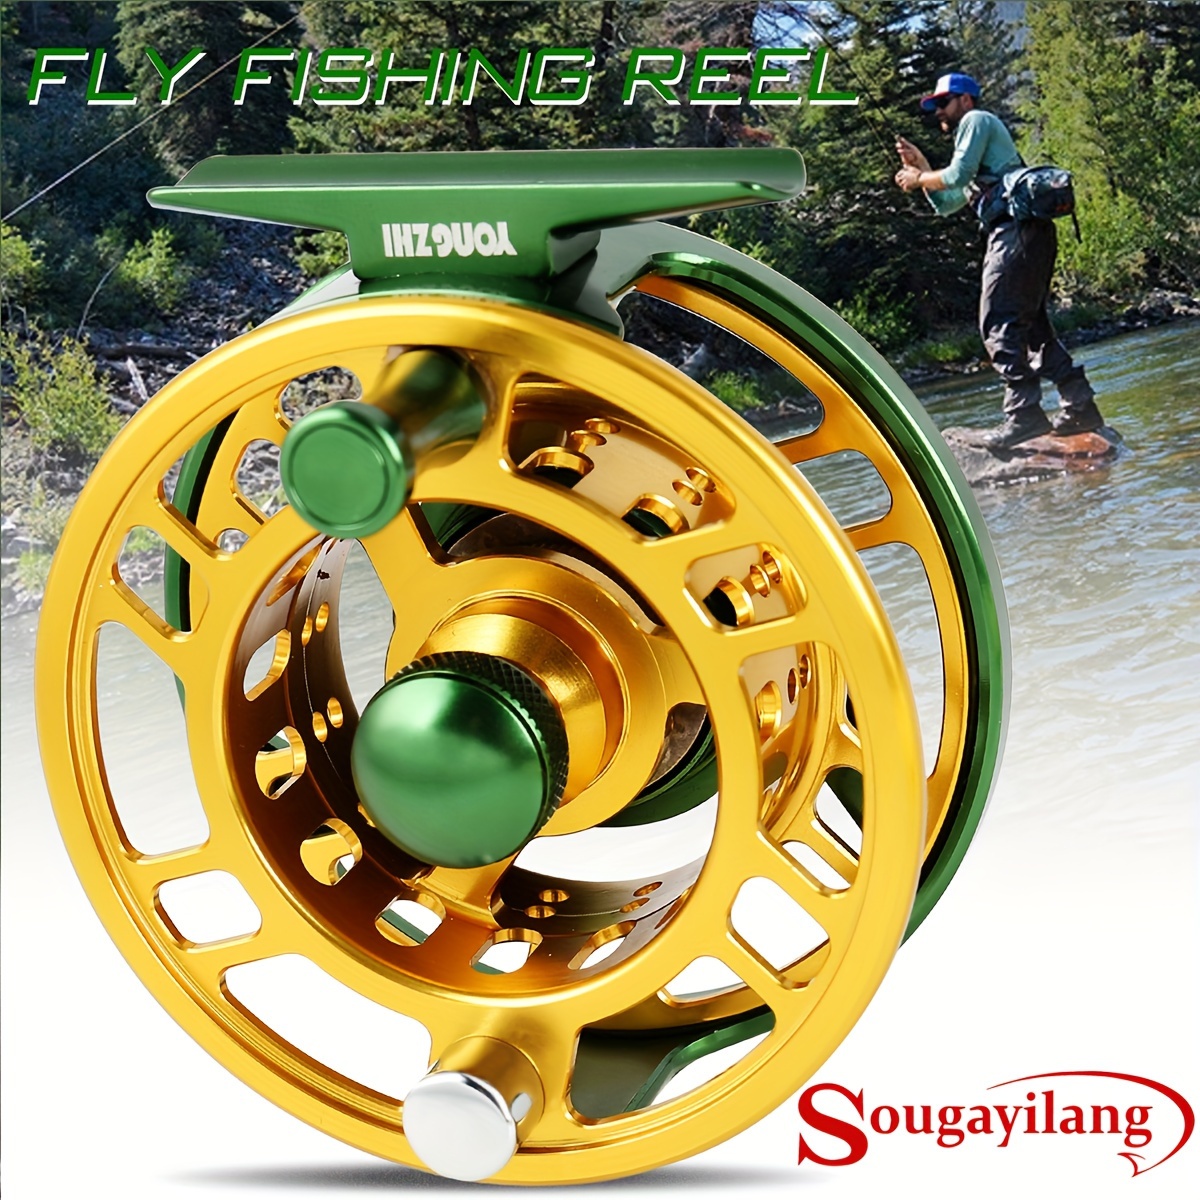 SOUGAYILANG Fly Fishing Reels ABS Hard Plastic Body Ultra Smooth